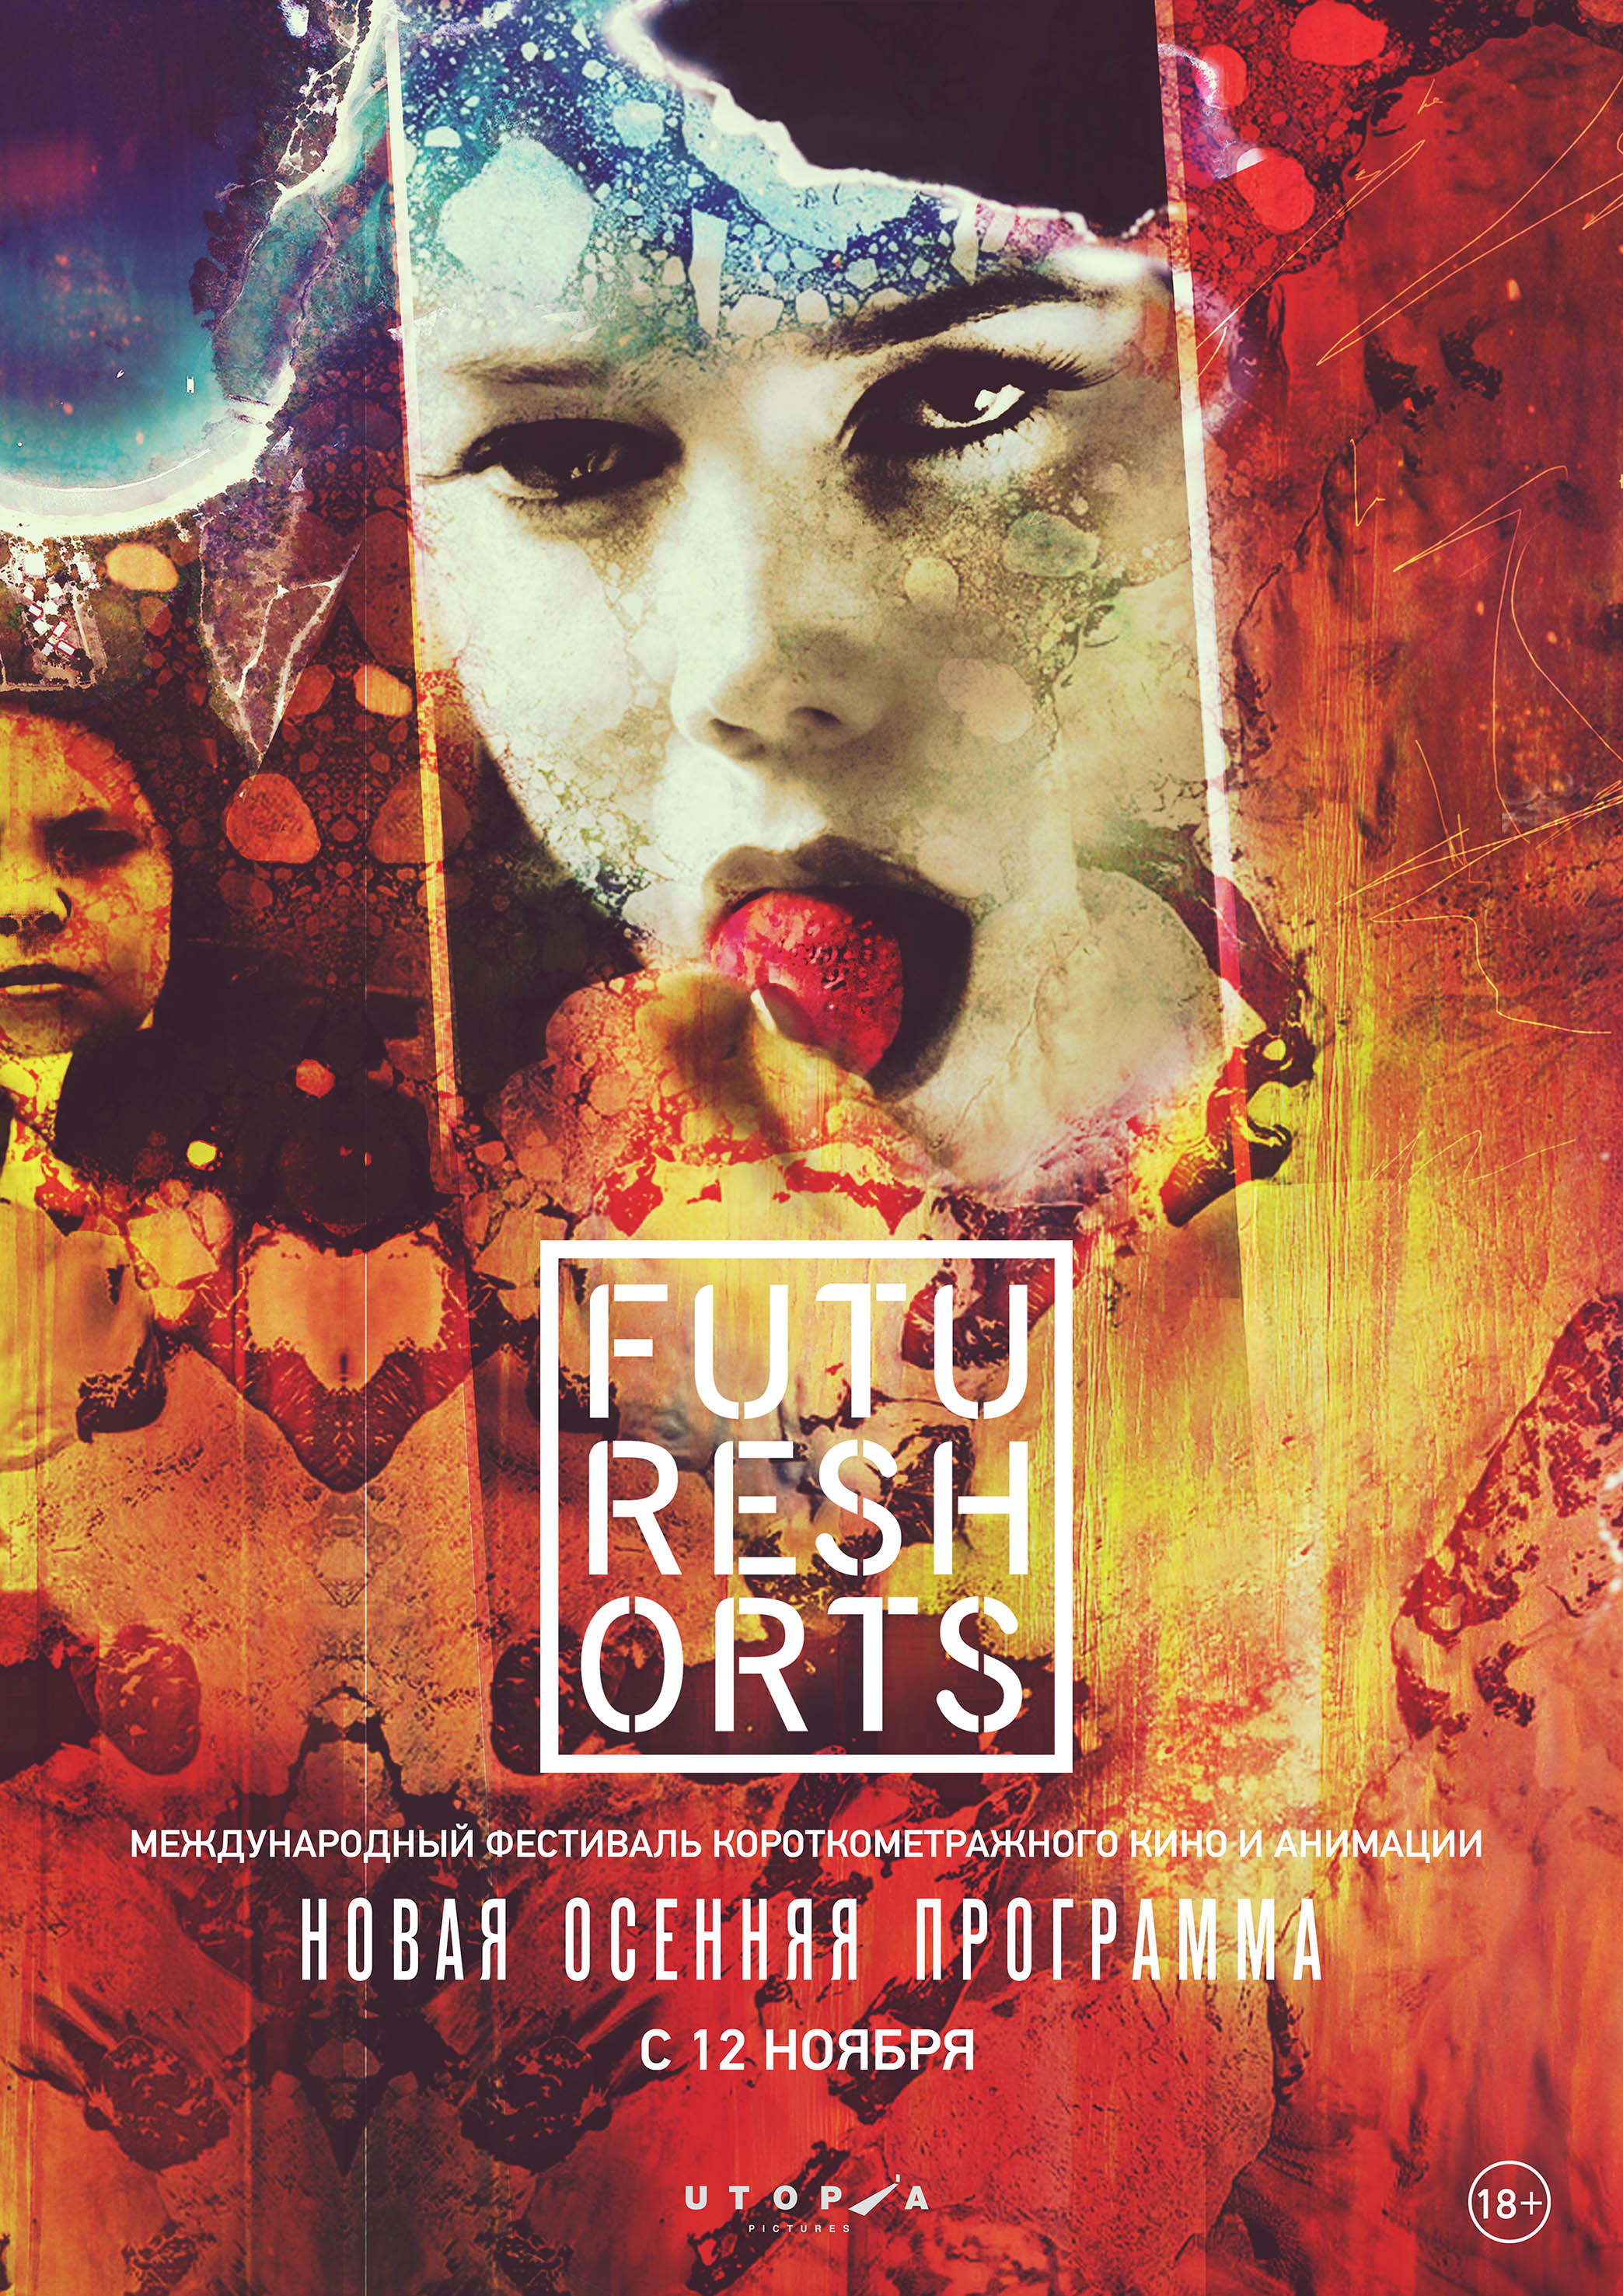 Utopia pictures и future shorts russia. 